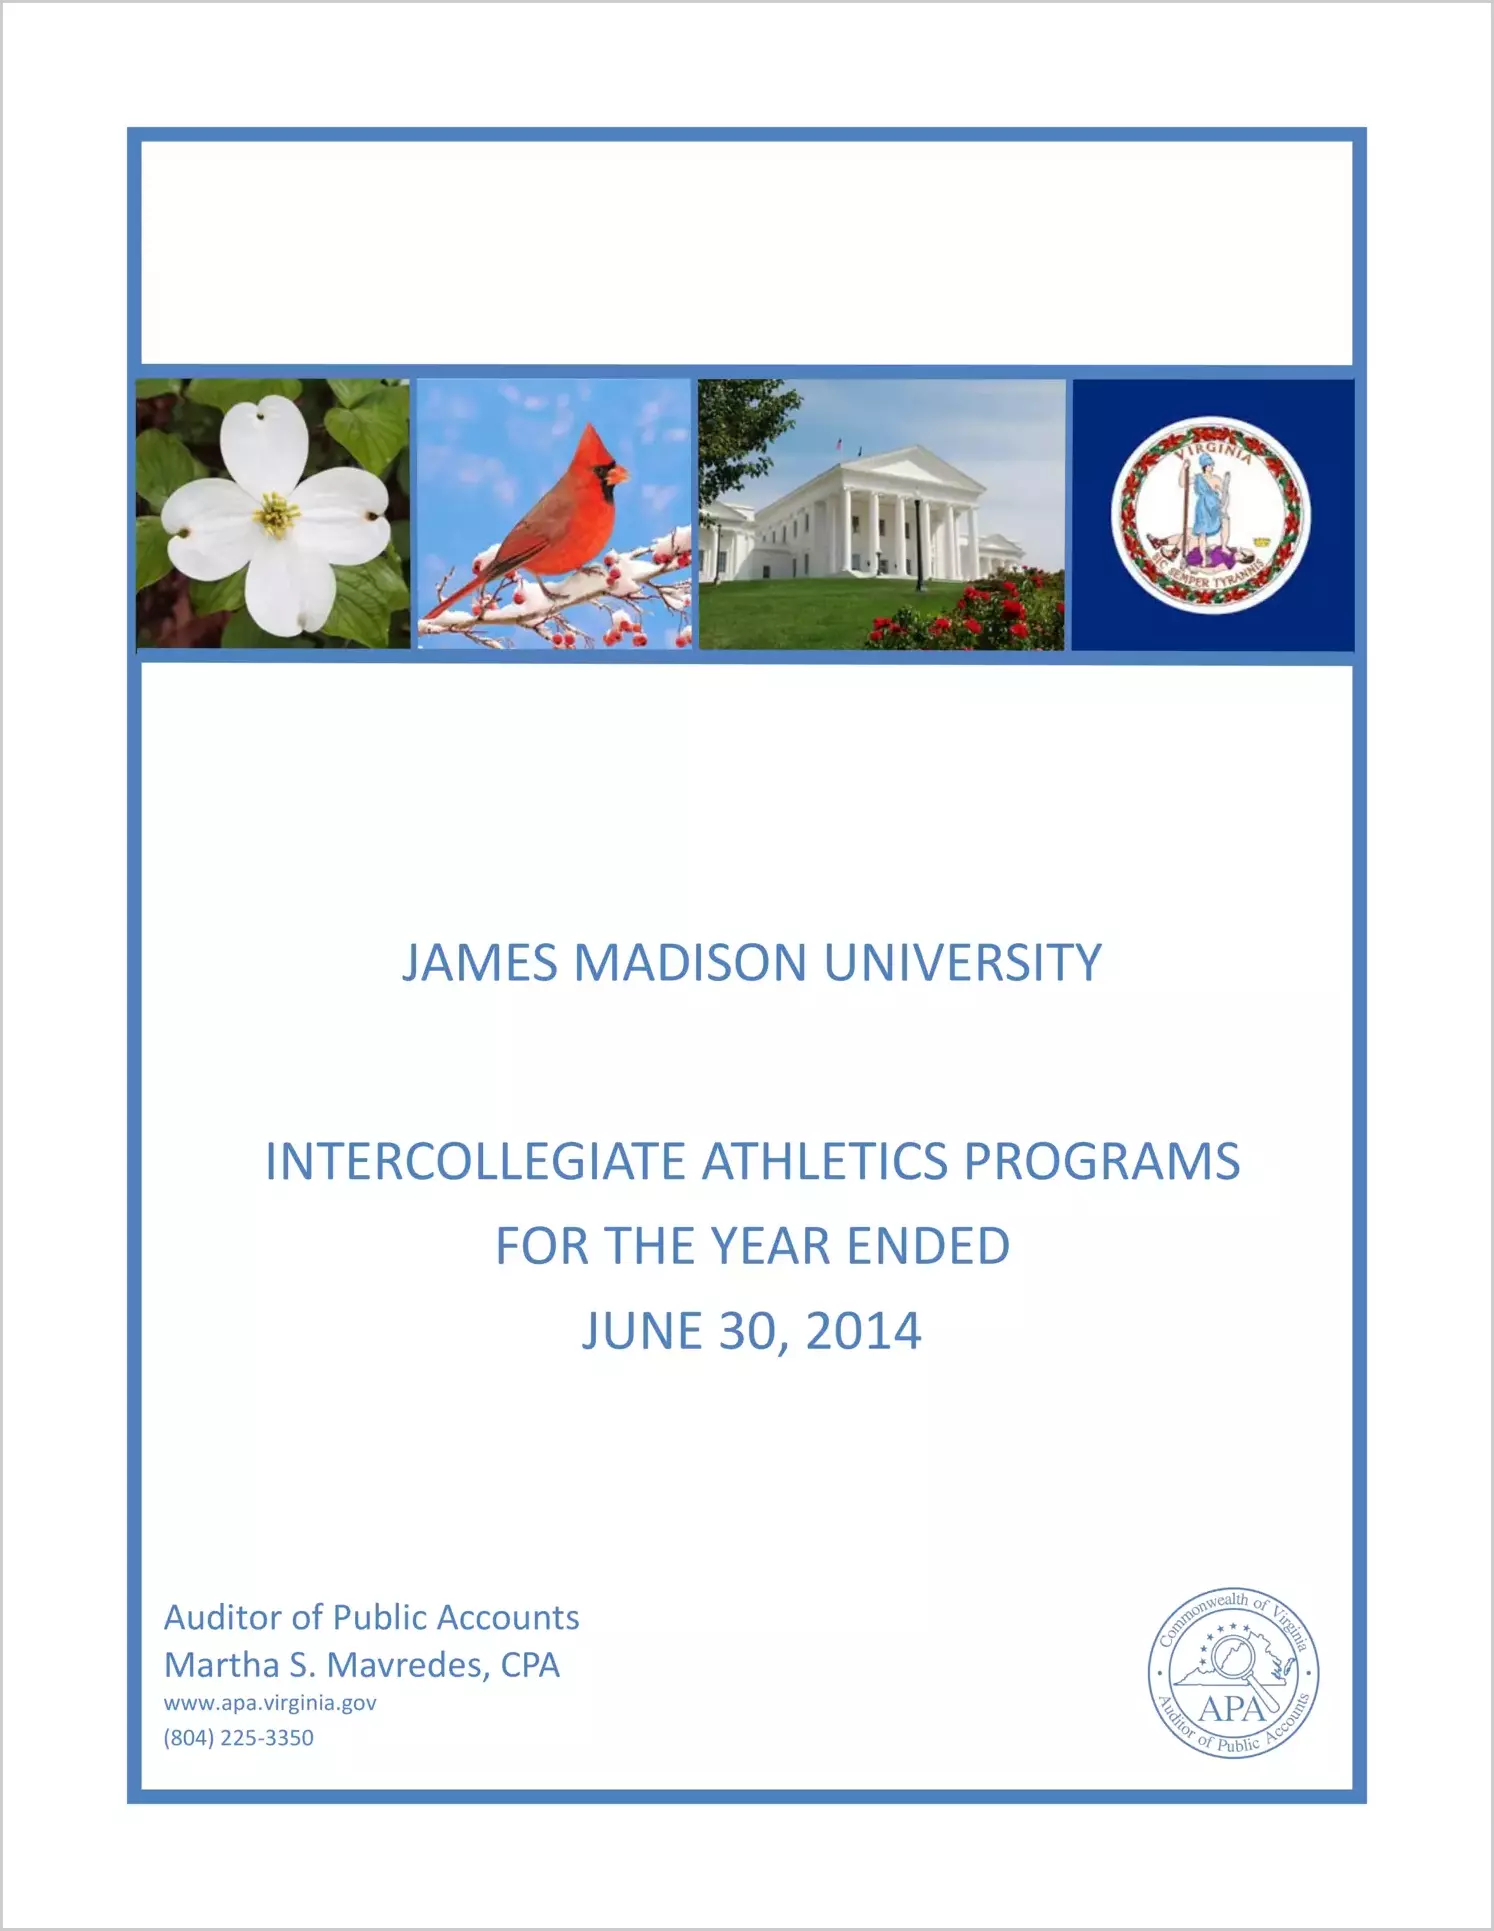 James Madison University Intercollegiate Athletics Programs for the year ended June 30, 2014